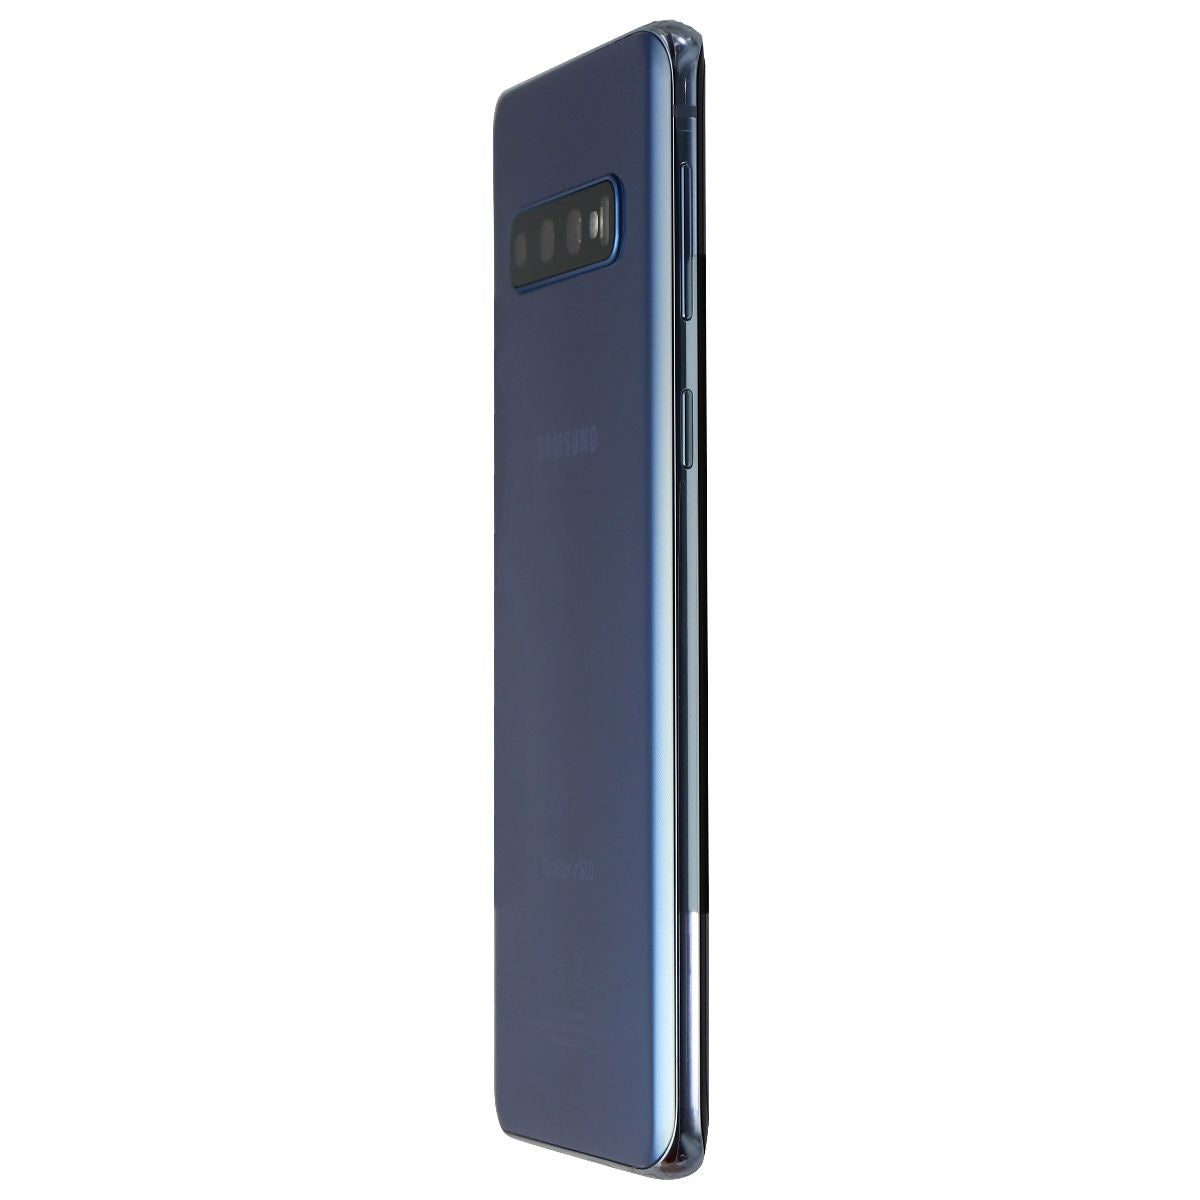 Samsung Galaxy S10 (6.1-in) Smartphone SM-G973U GSM +